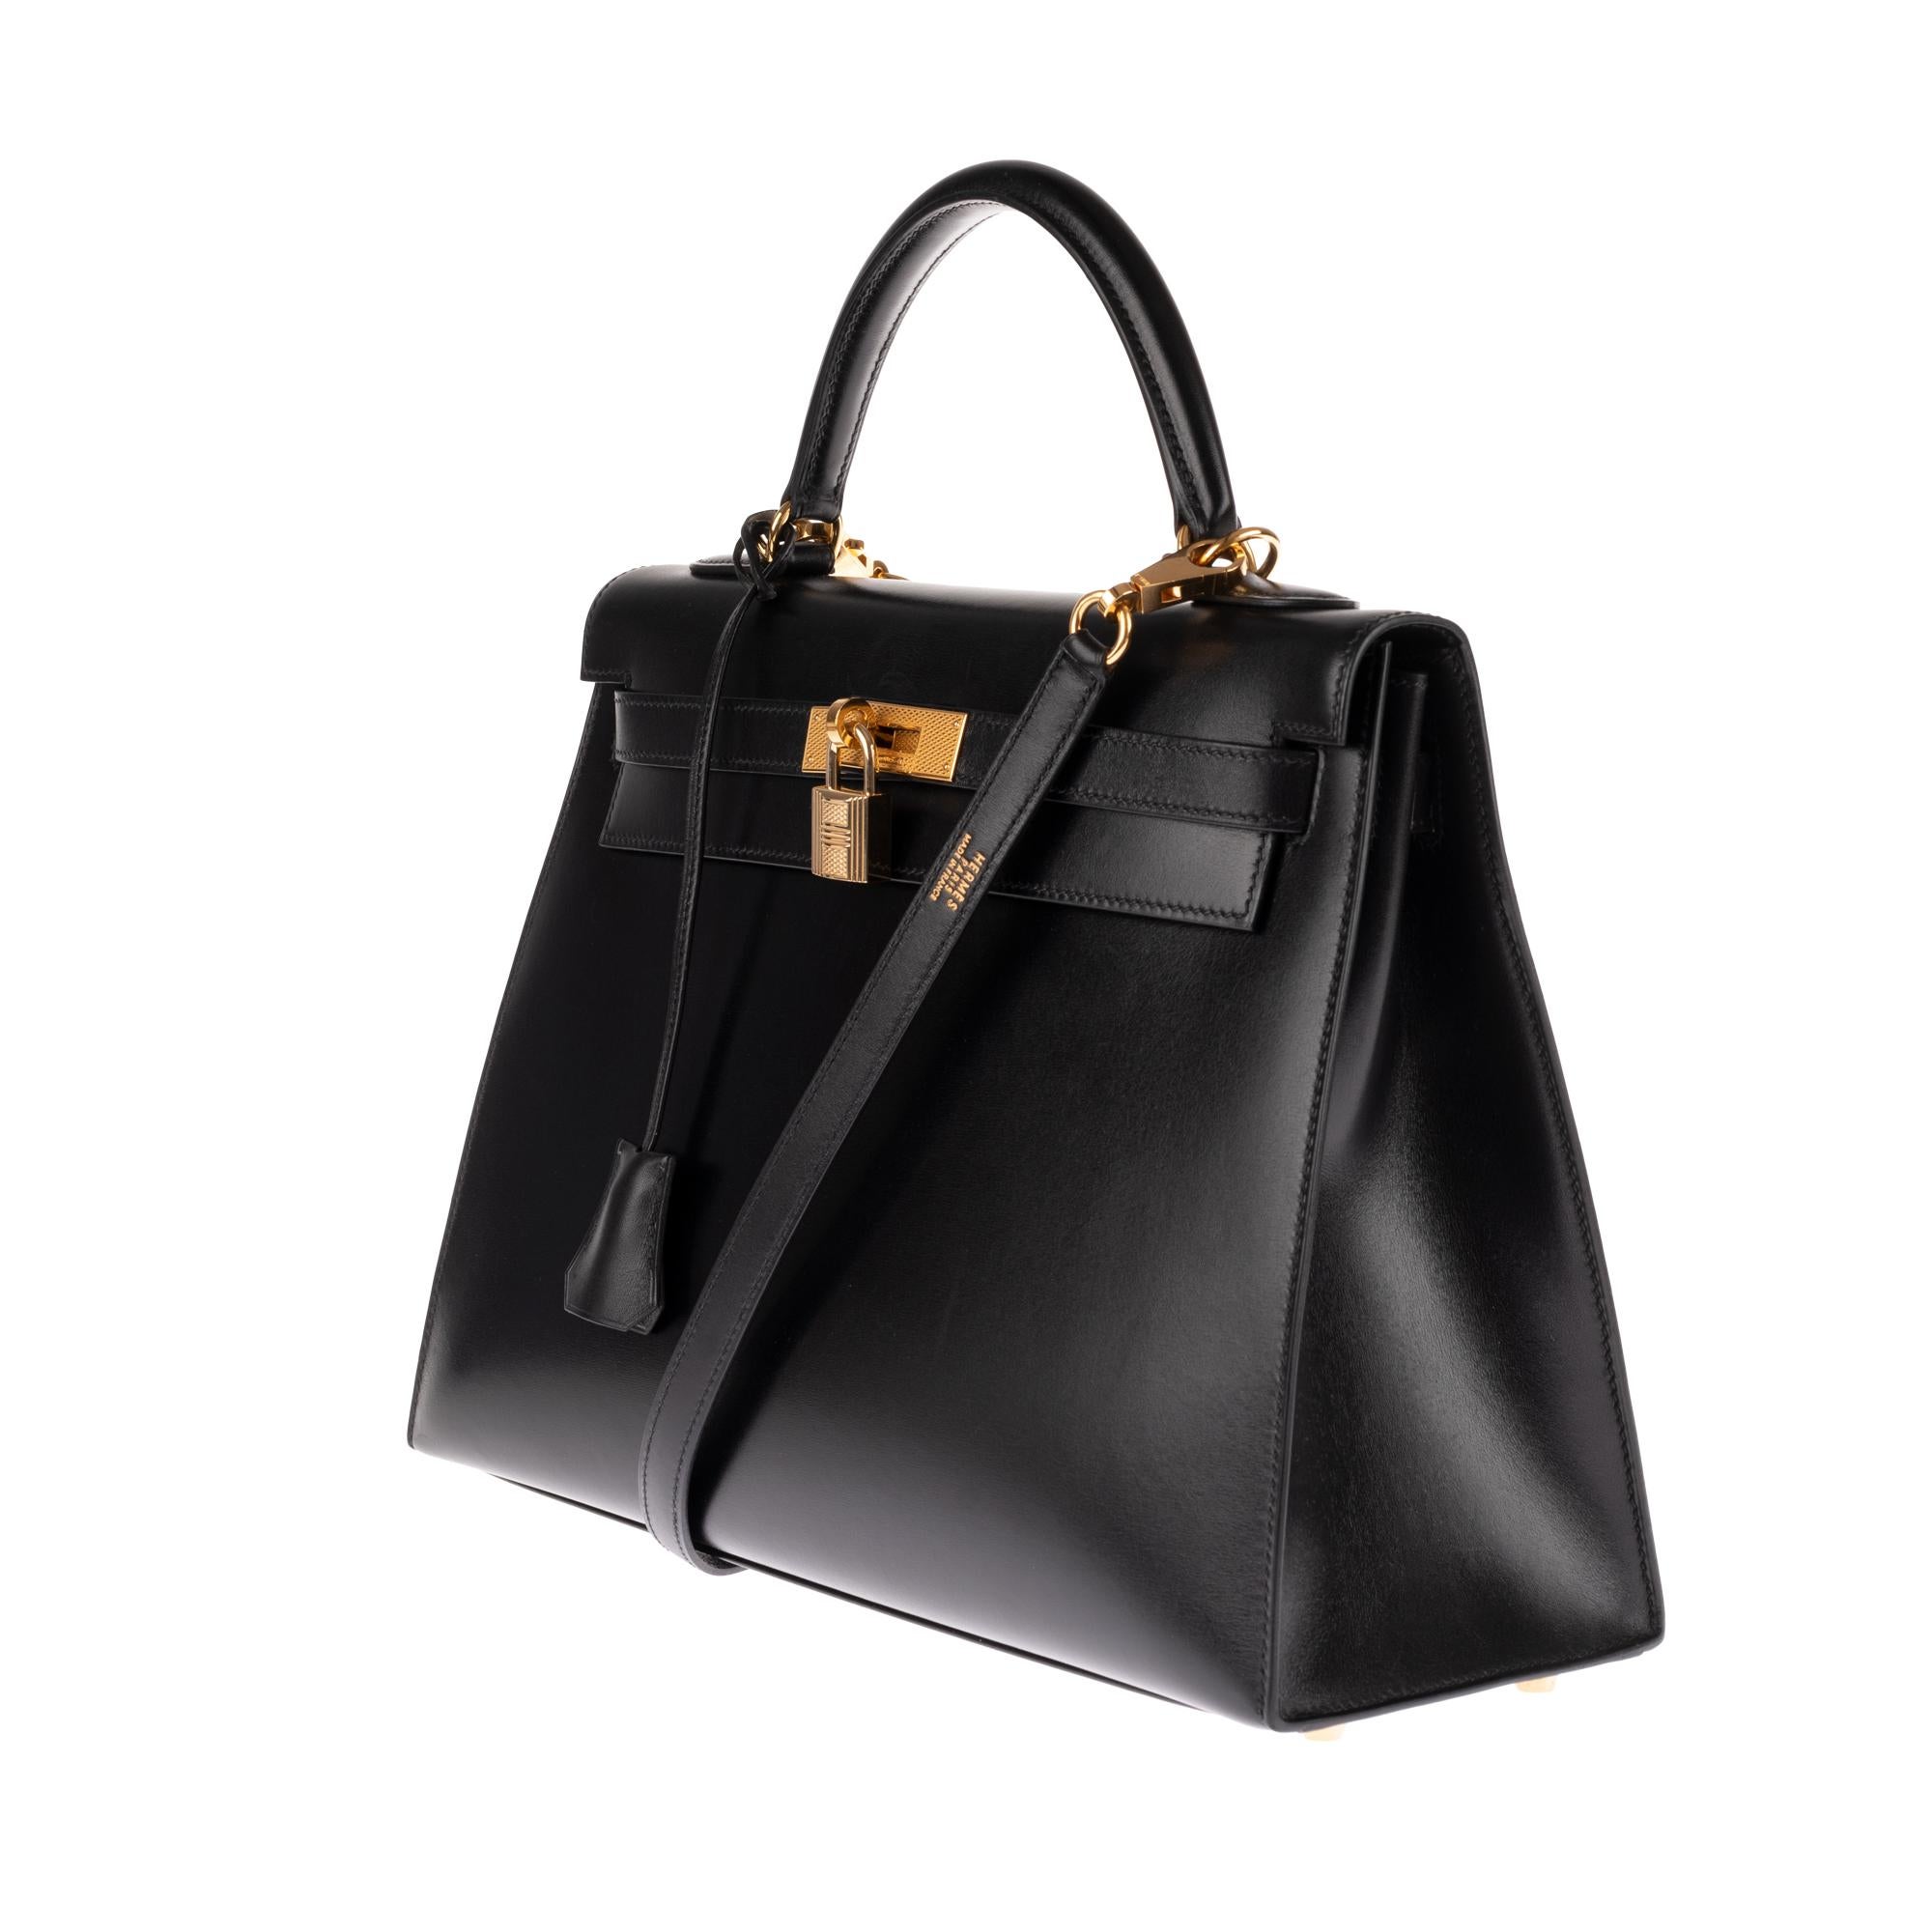 Black Very limited Handbag Hermès Kelly sellier 32 with strap in black calfskin, GHW!